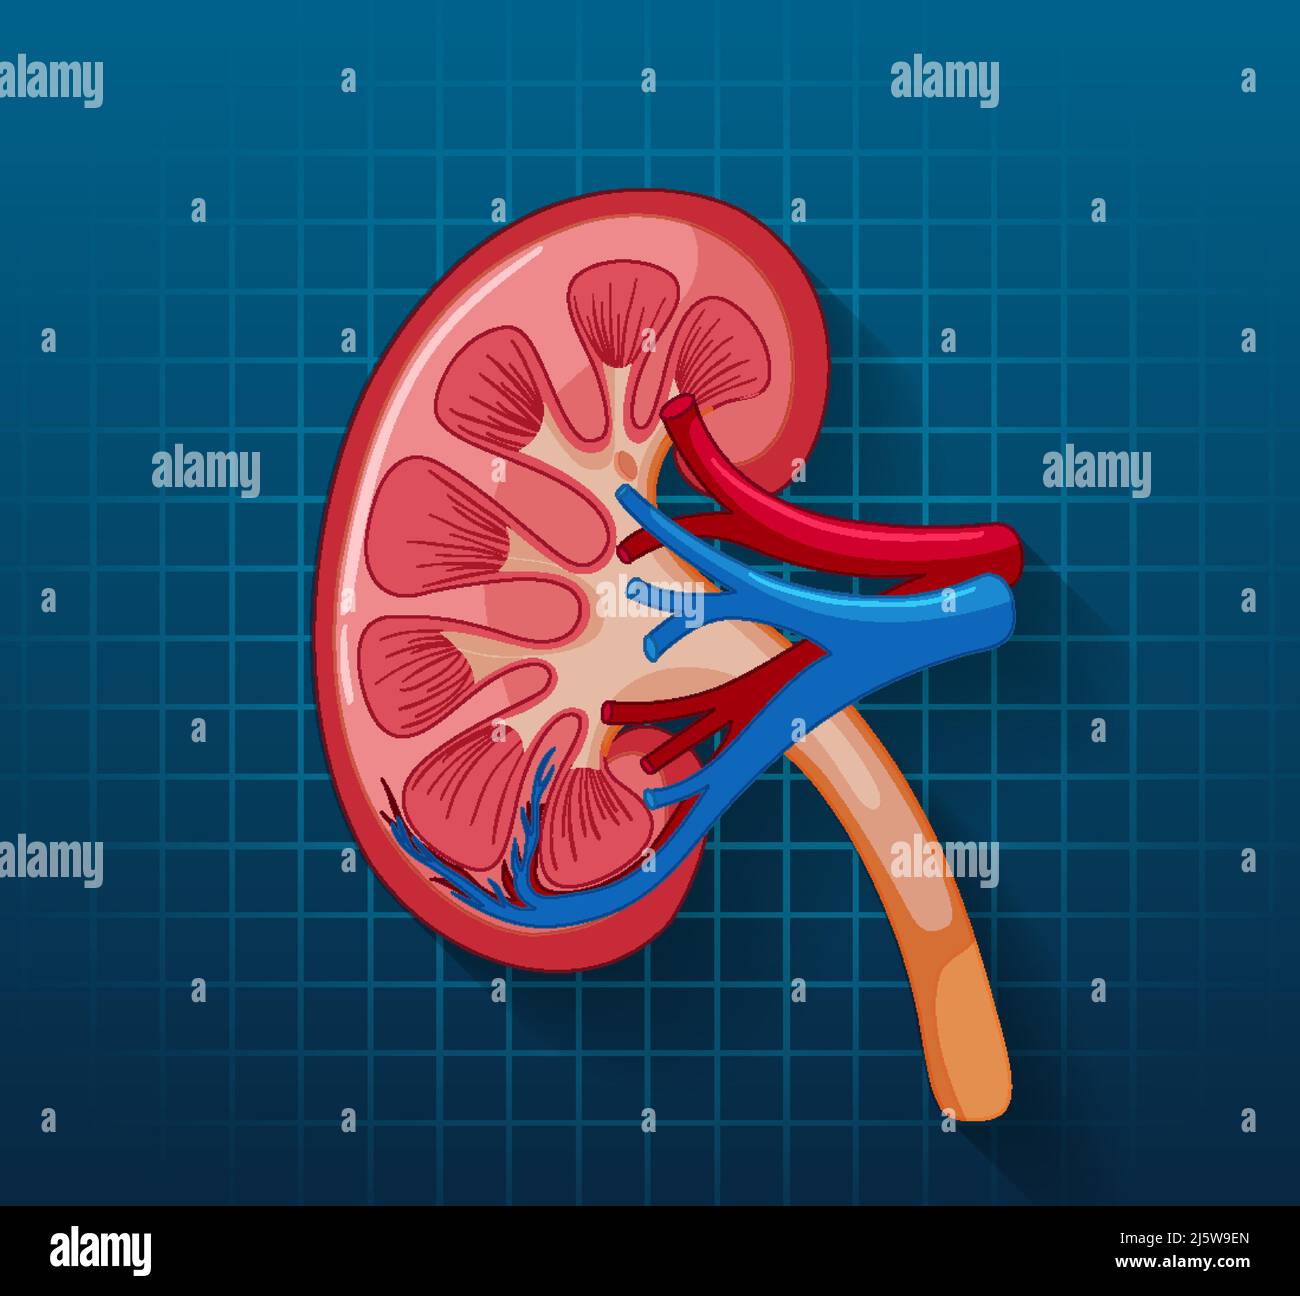 Human internal organ with kidney illustration Stock Vector Image & Art ...